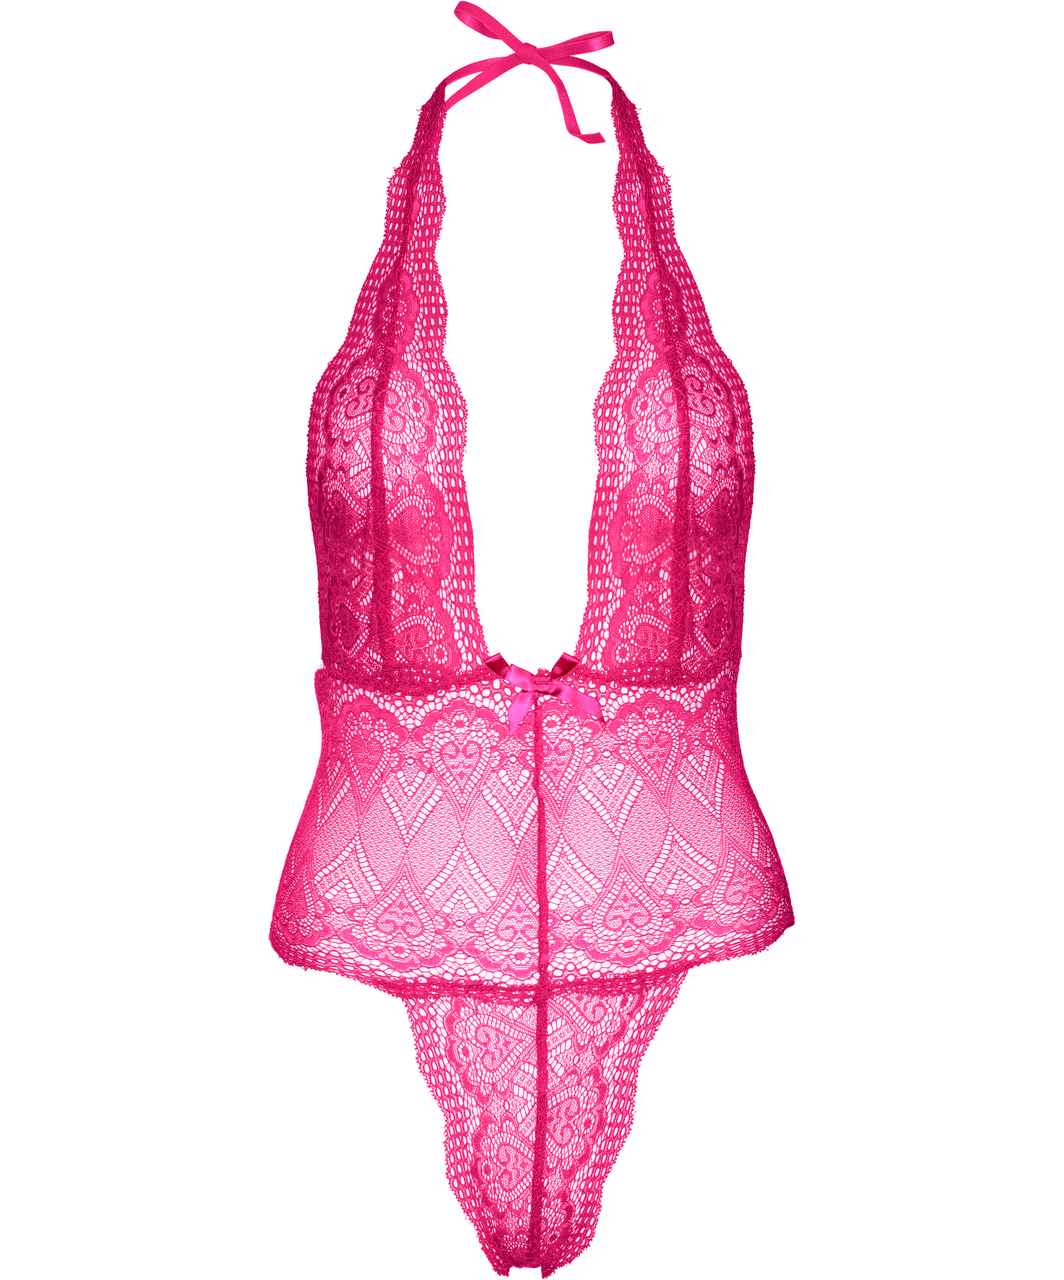 Daring Intimates pink open back lace bodysuit